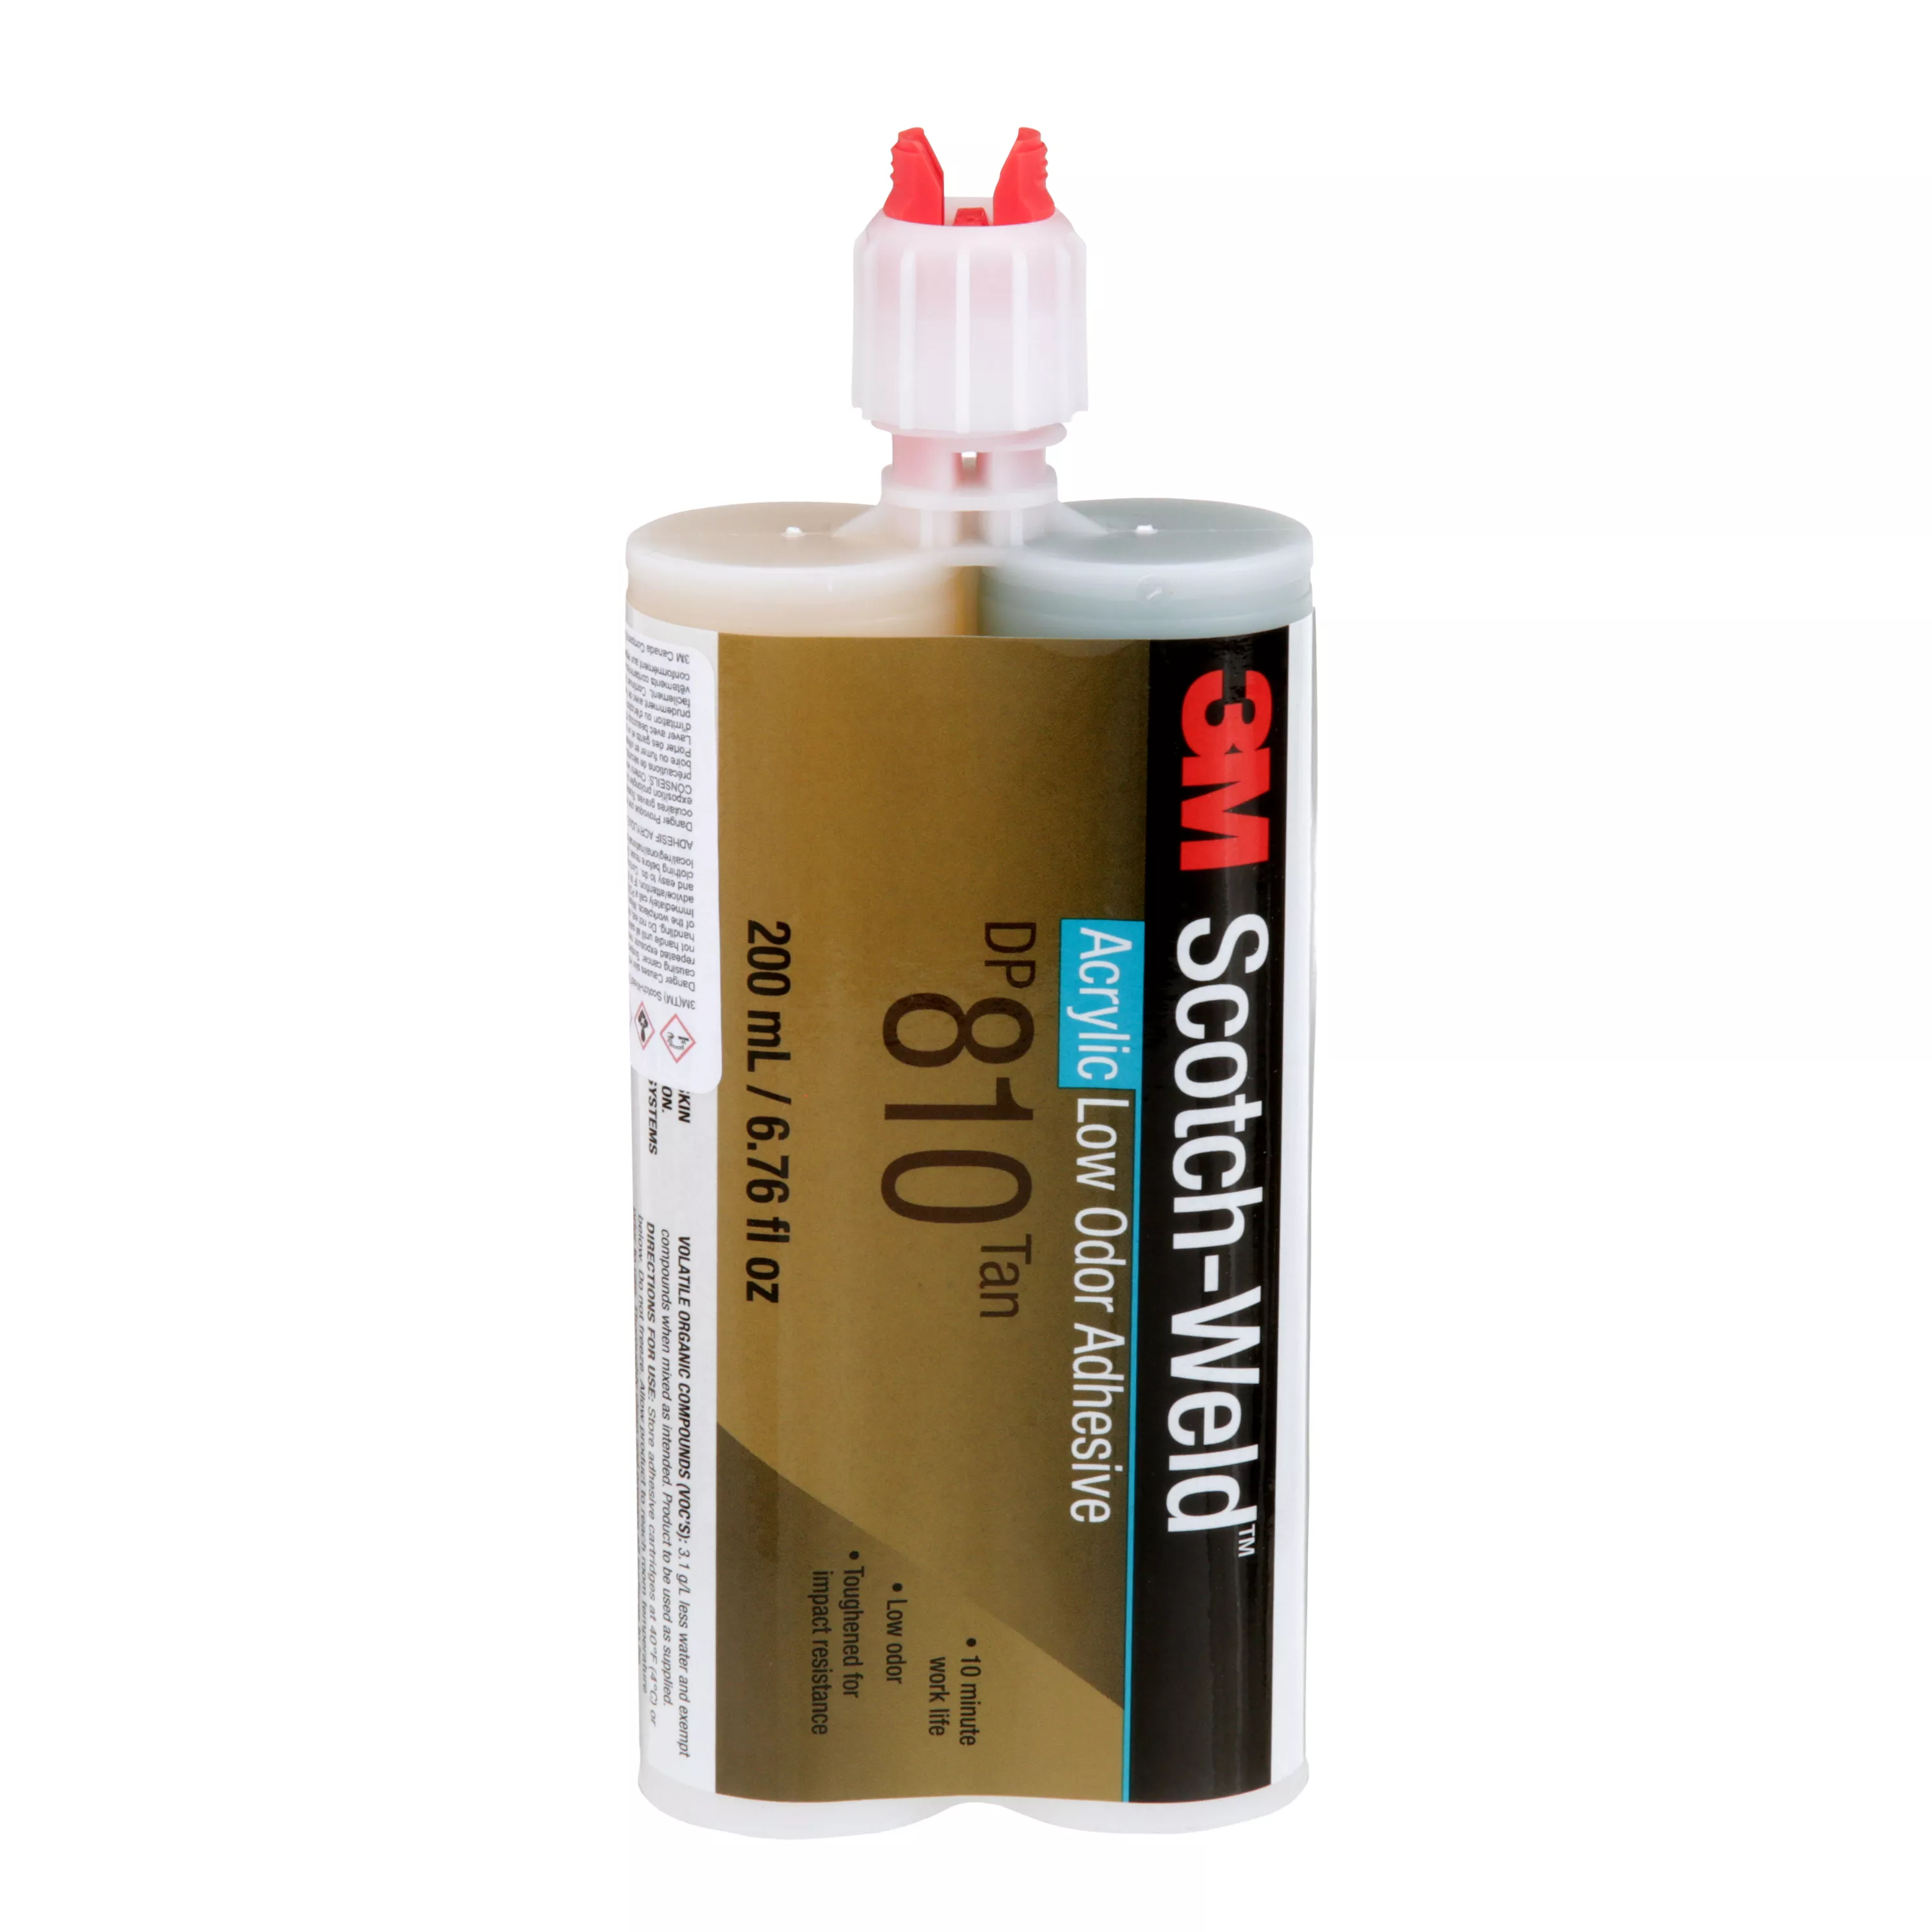 3M™ Scotch-Weld™ Low Odor Acrylic Adhesive DP810, Tan, 200 mL Duo-Pak,
12/Case